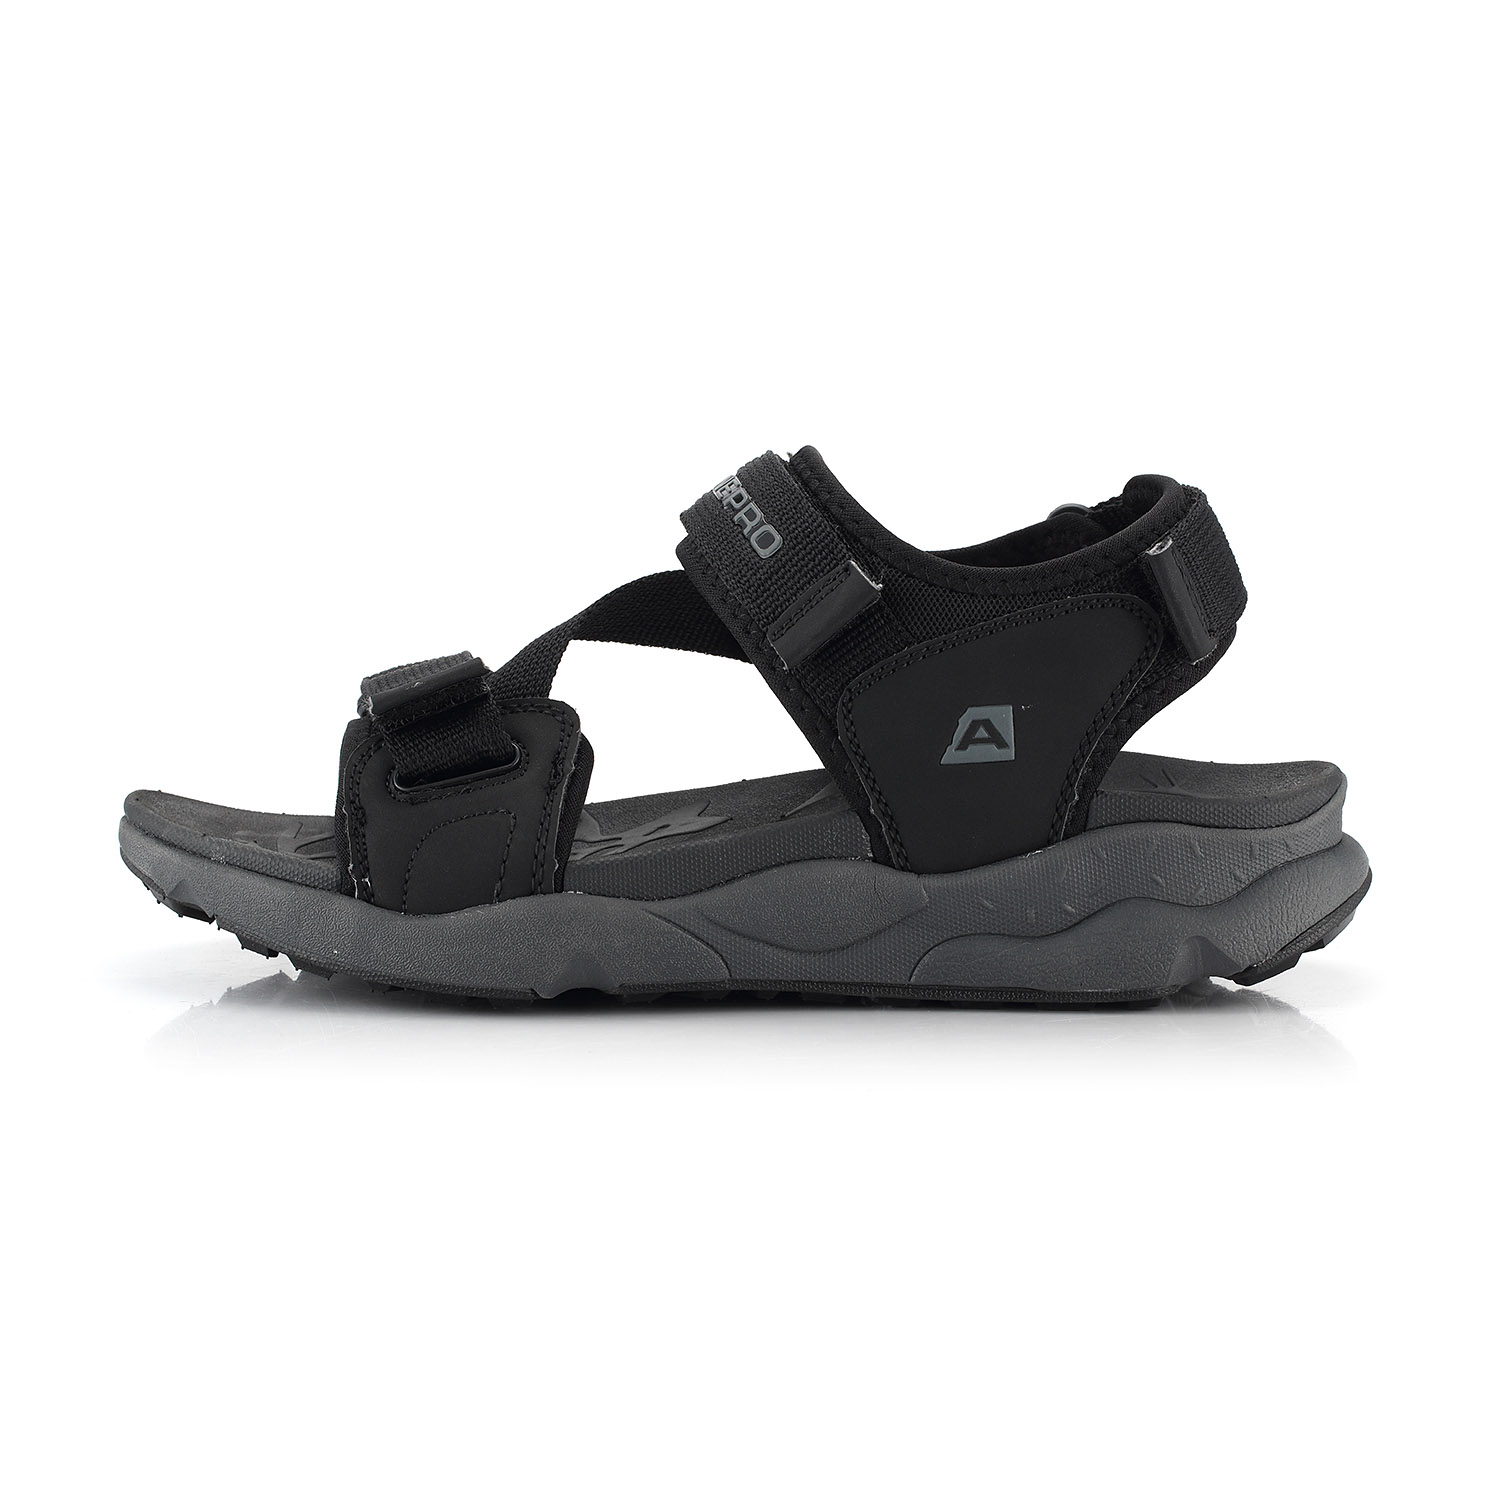 Men's summer sandals ALPINE PRO JARC black